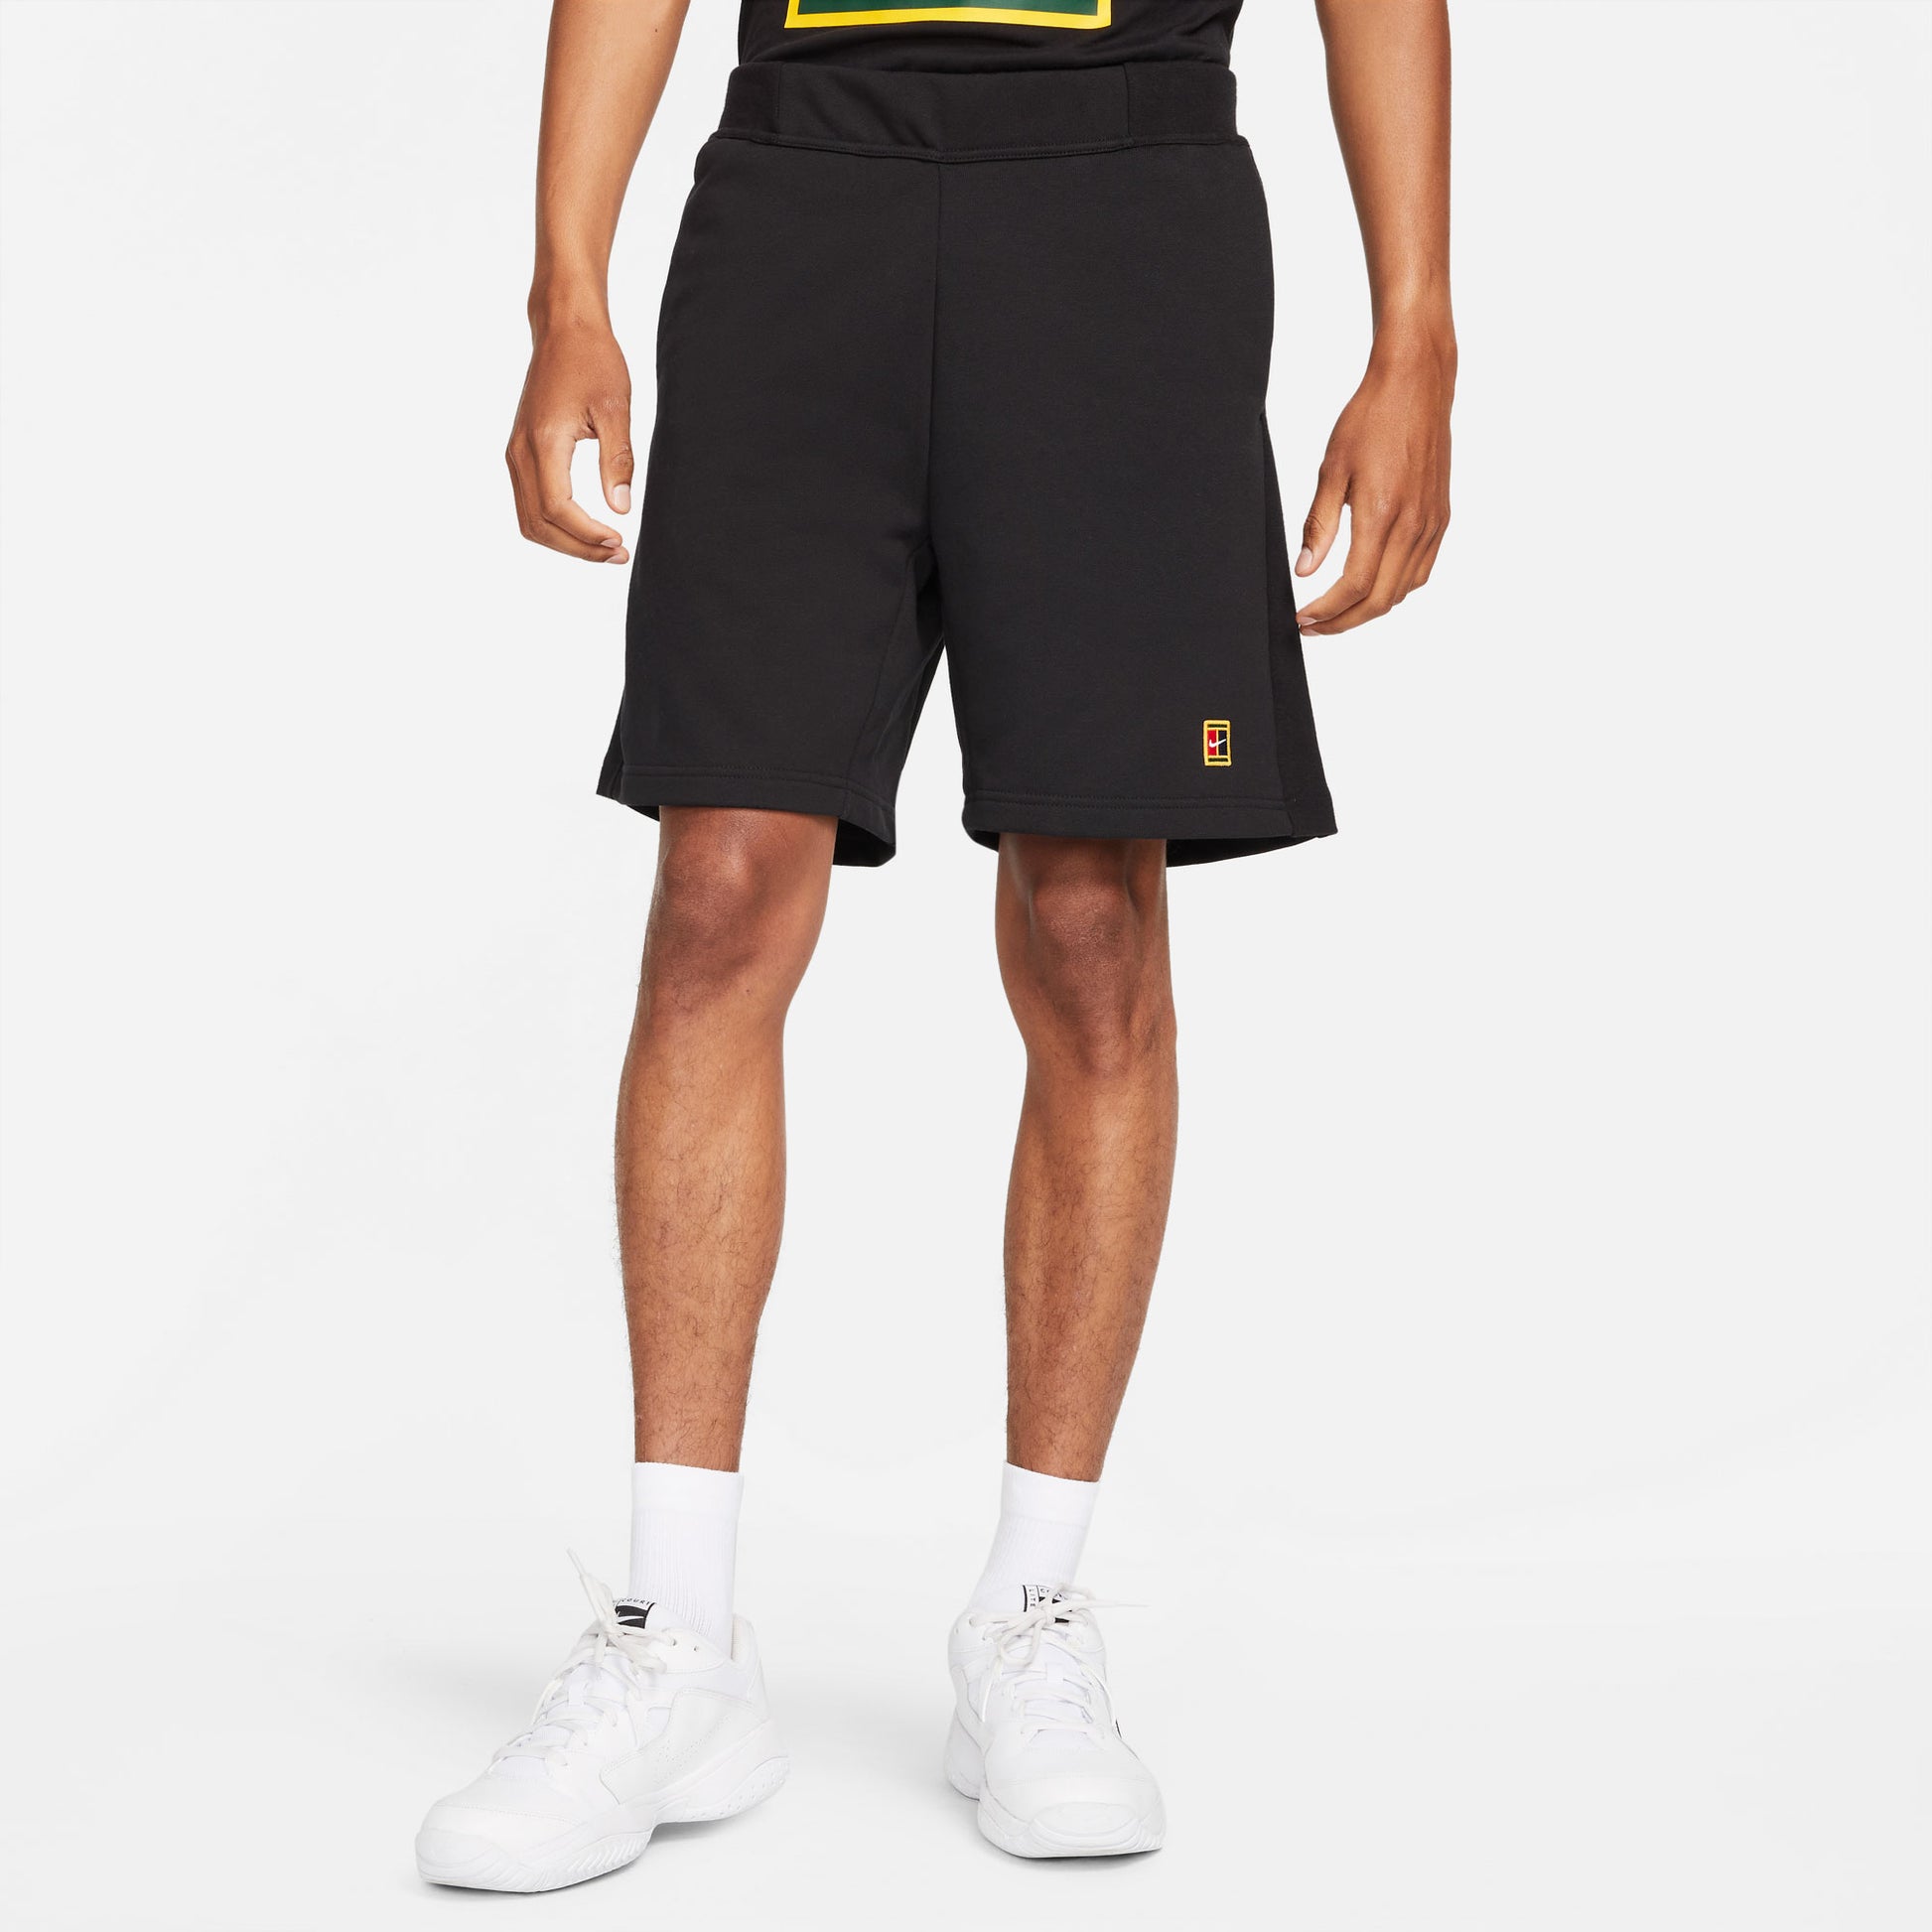 NikeCourt Heritage Men's Fleece Tennis Shorts Black (1)